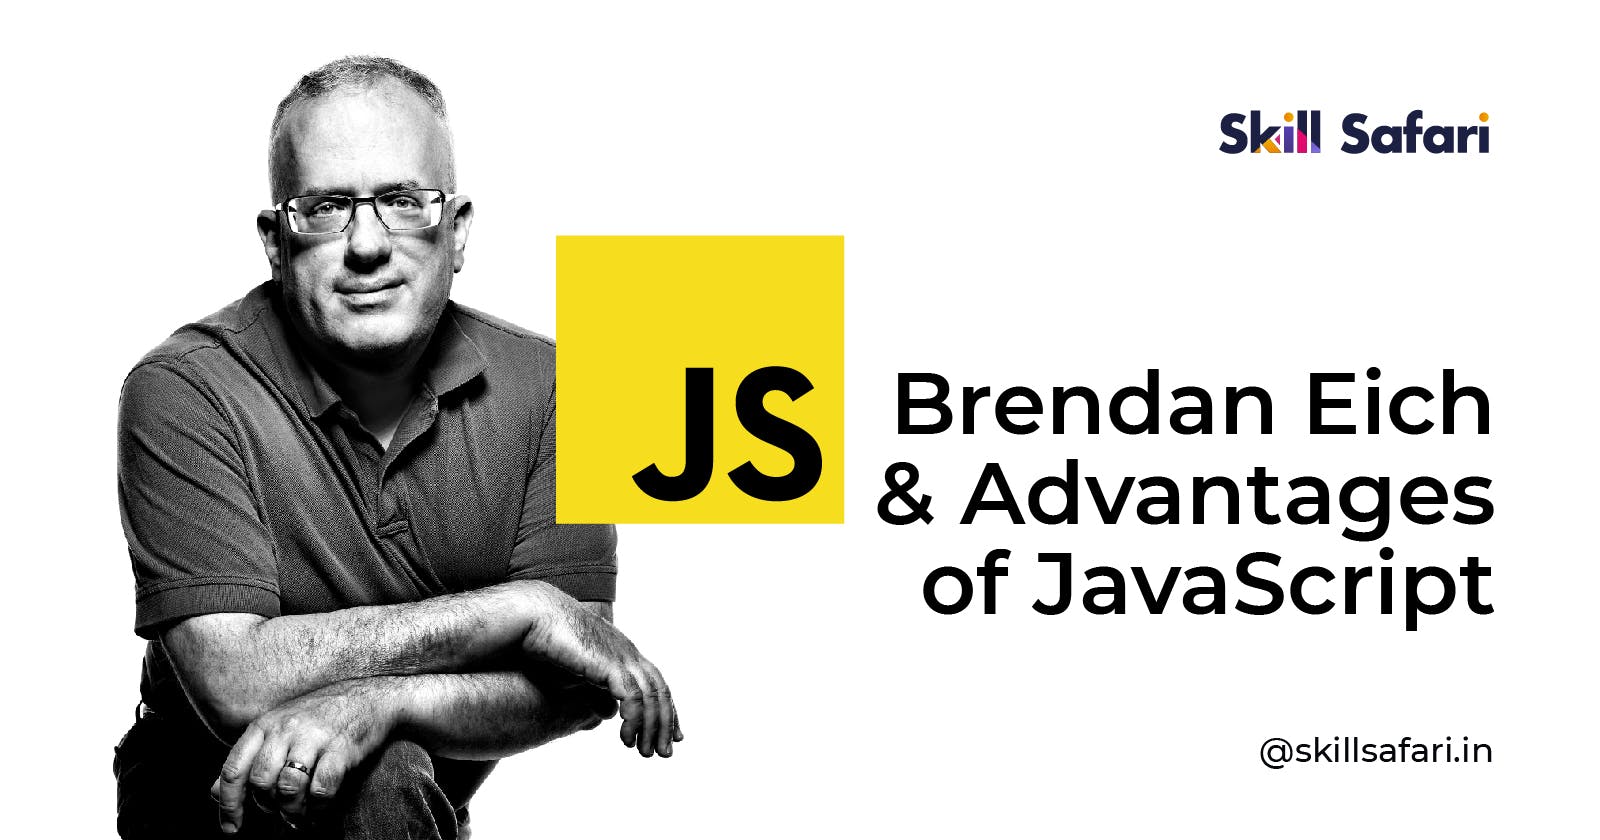 Brendan Eich & Advantages of JavaScript